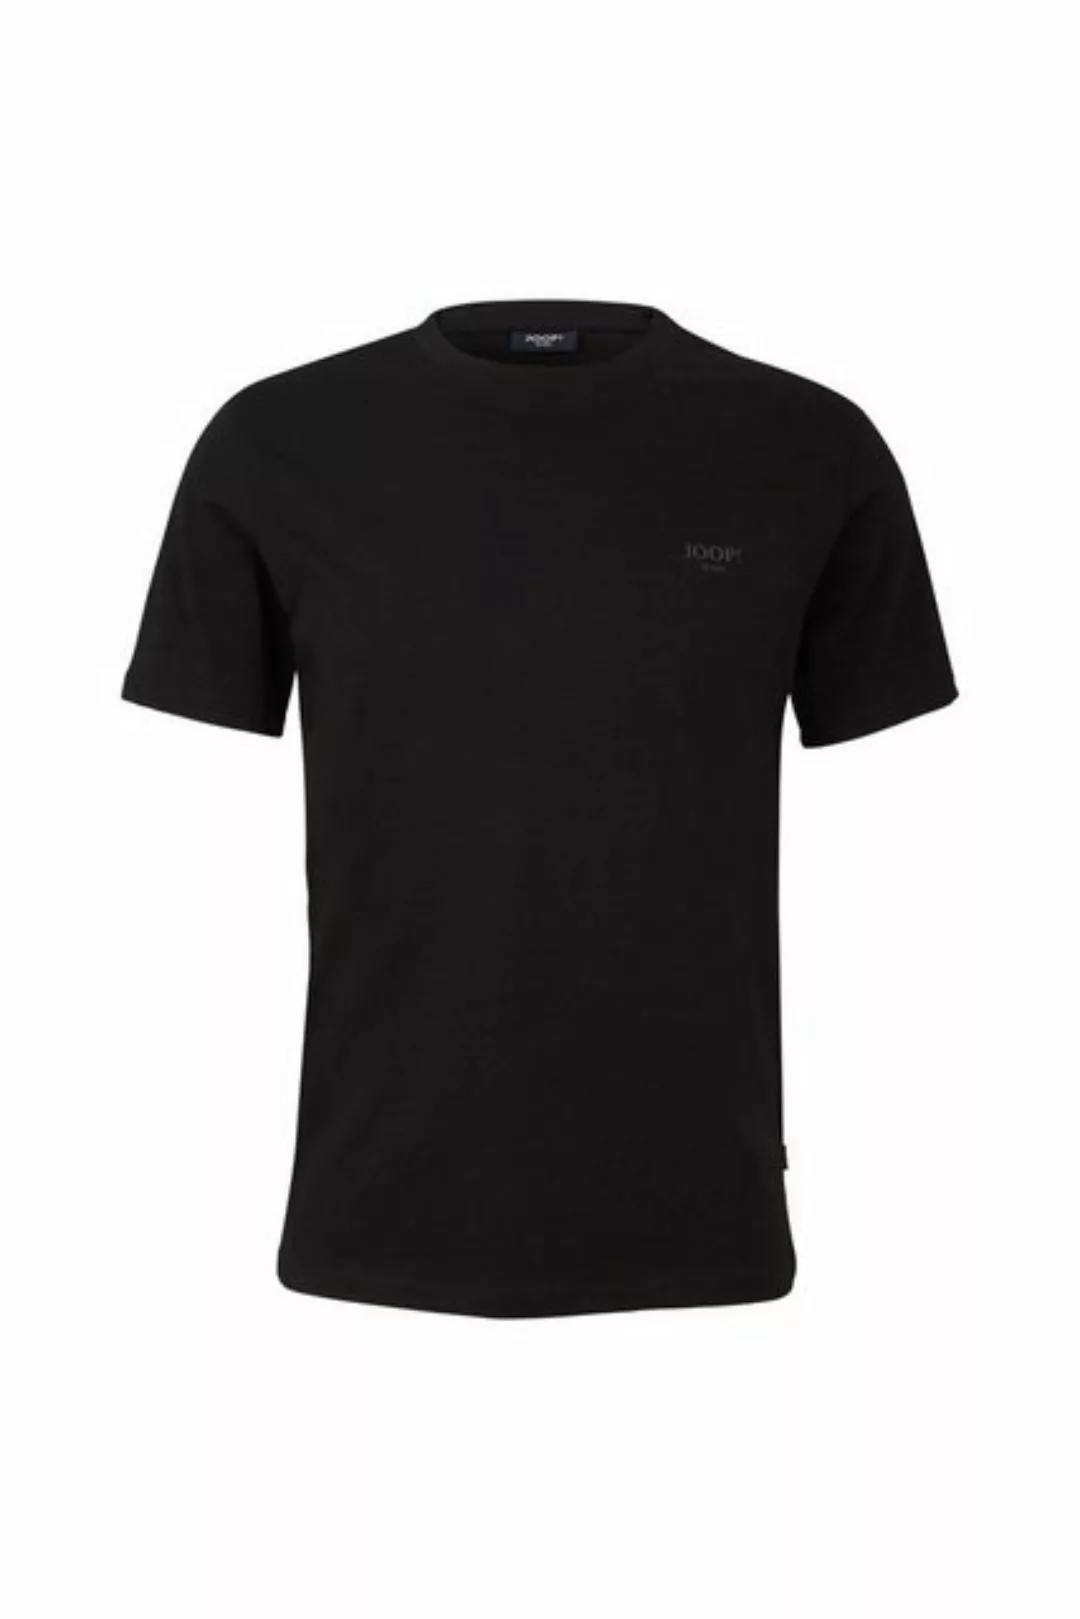 Joop! Herren Rundhals T-Shirt Alphis - Regular Fit günstig online kaufen